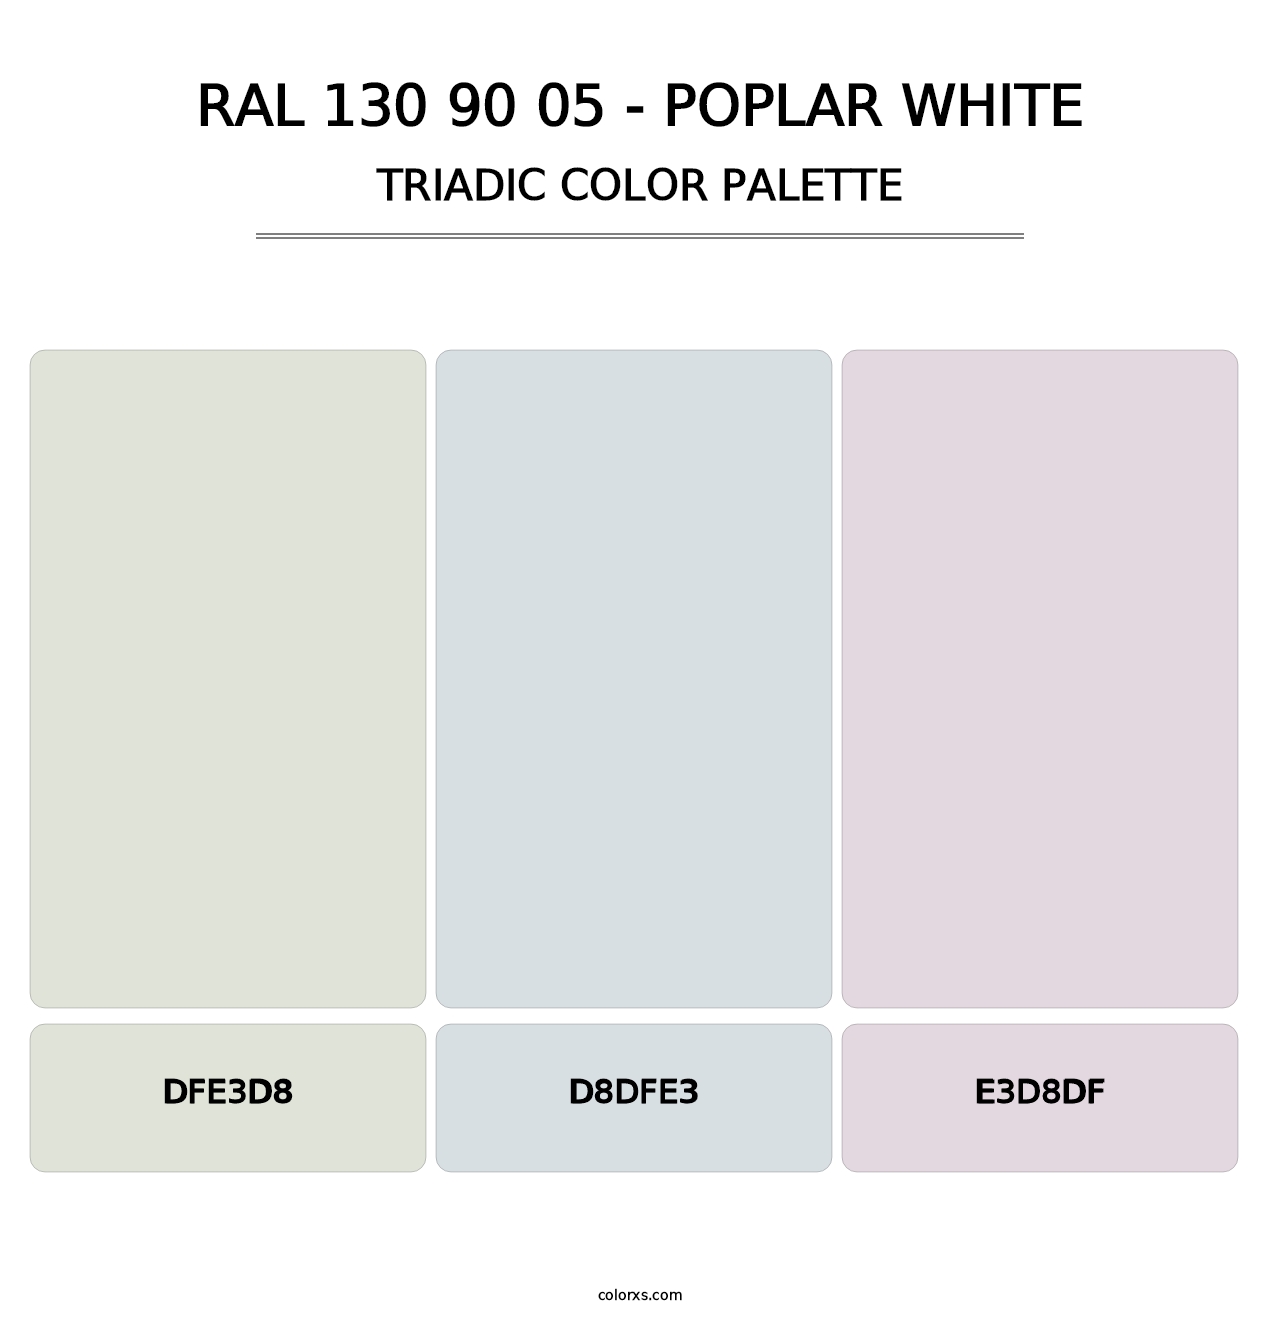 RAL 130 90 05 - Poplar White - Triadic Color Palette